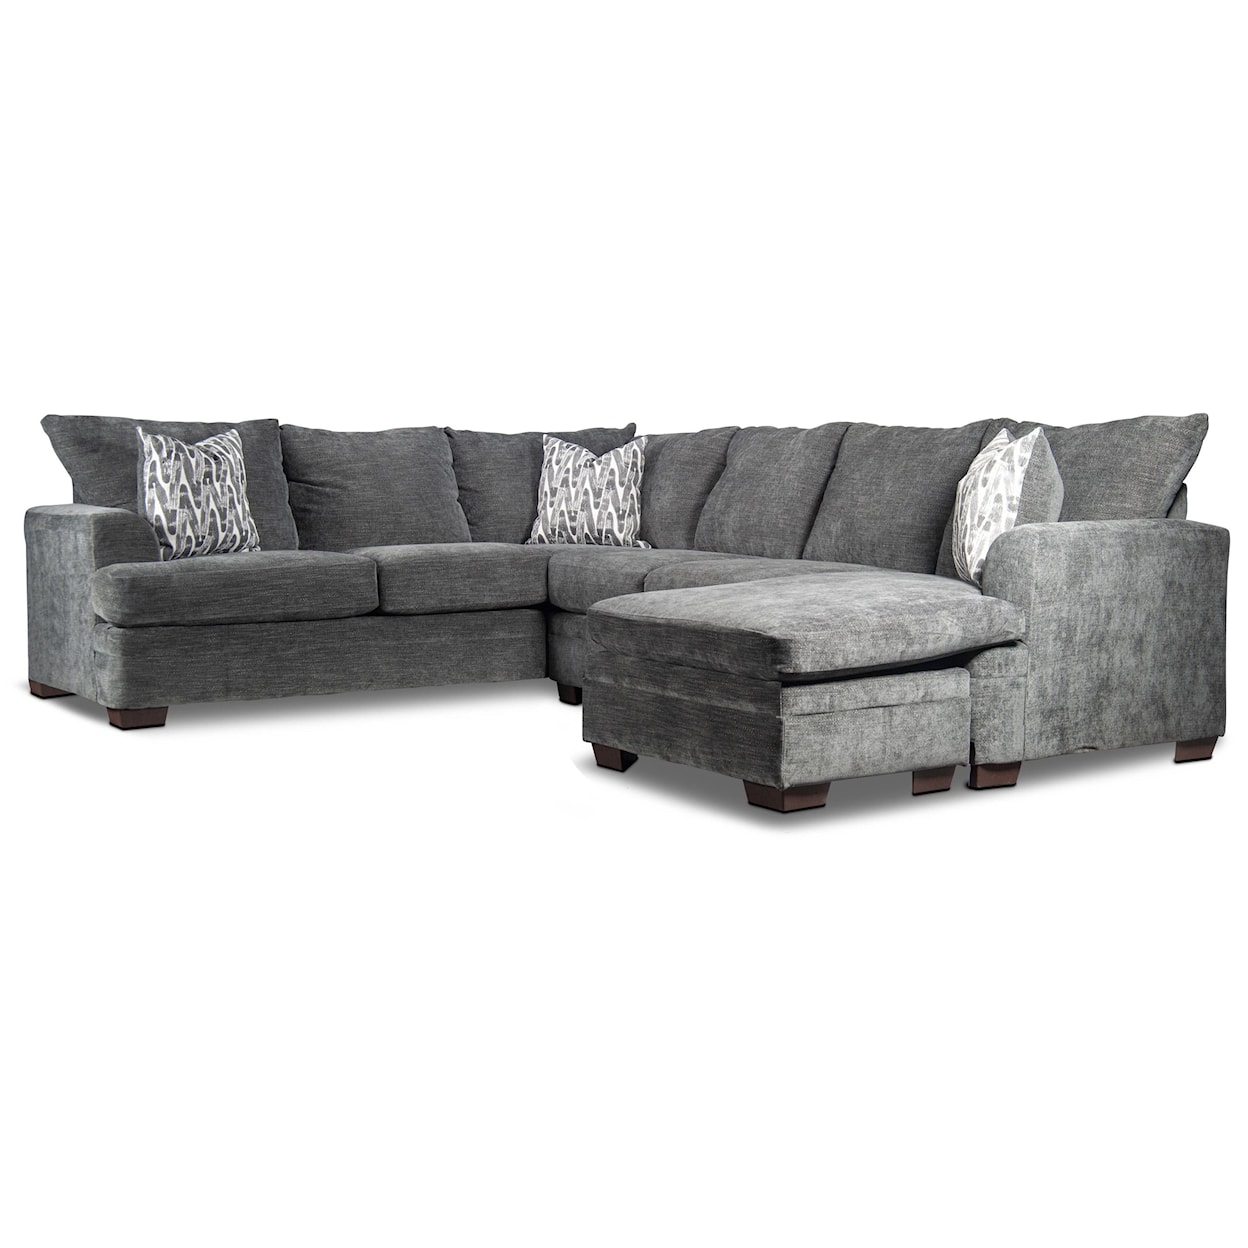 Peak Living Mercer Mercer Sectional Sofa with Chaise